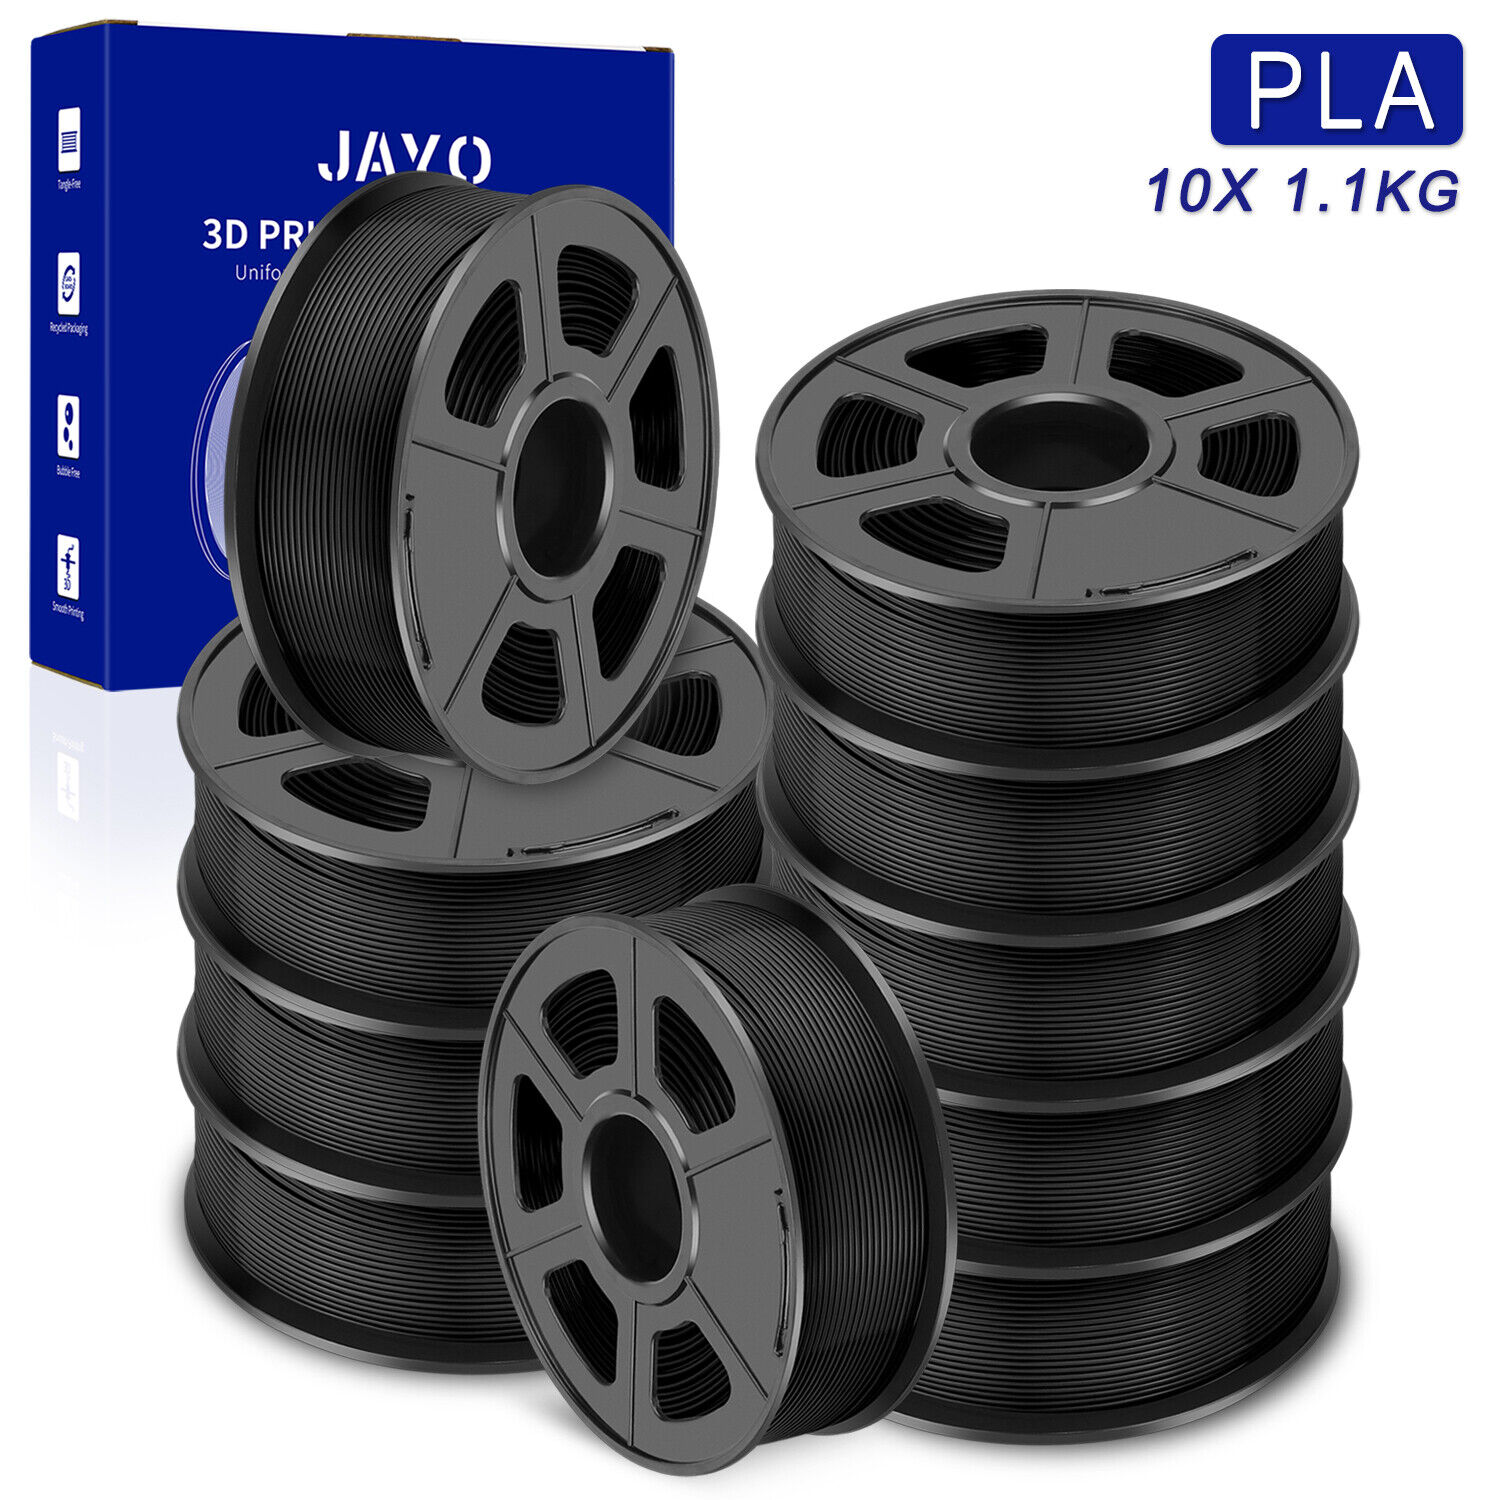 JAYO 10Rolls 1.75mm Filament 3D Printer PLA PLA+ SILK PETG 1.1KG Low Shrinkage